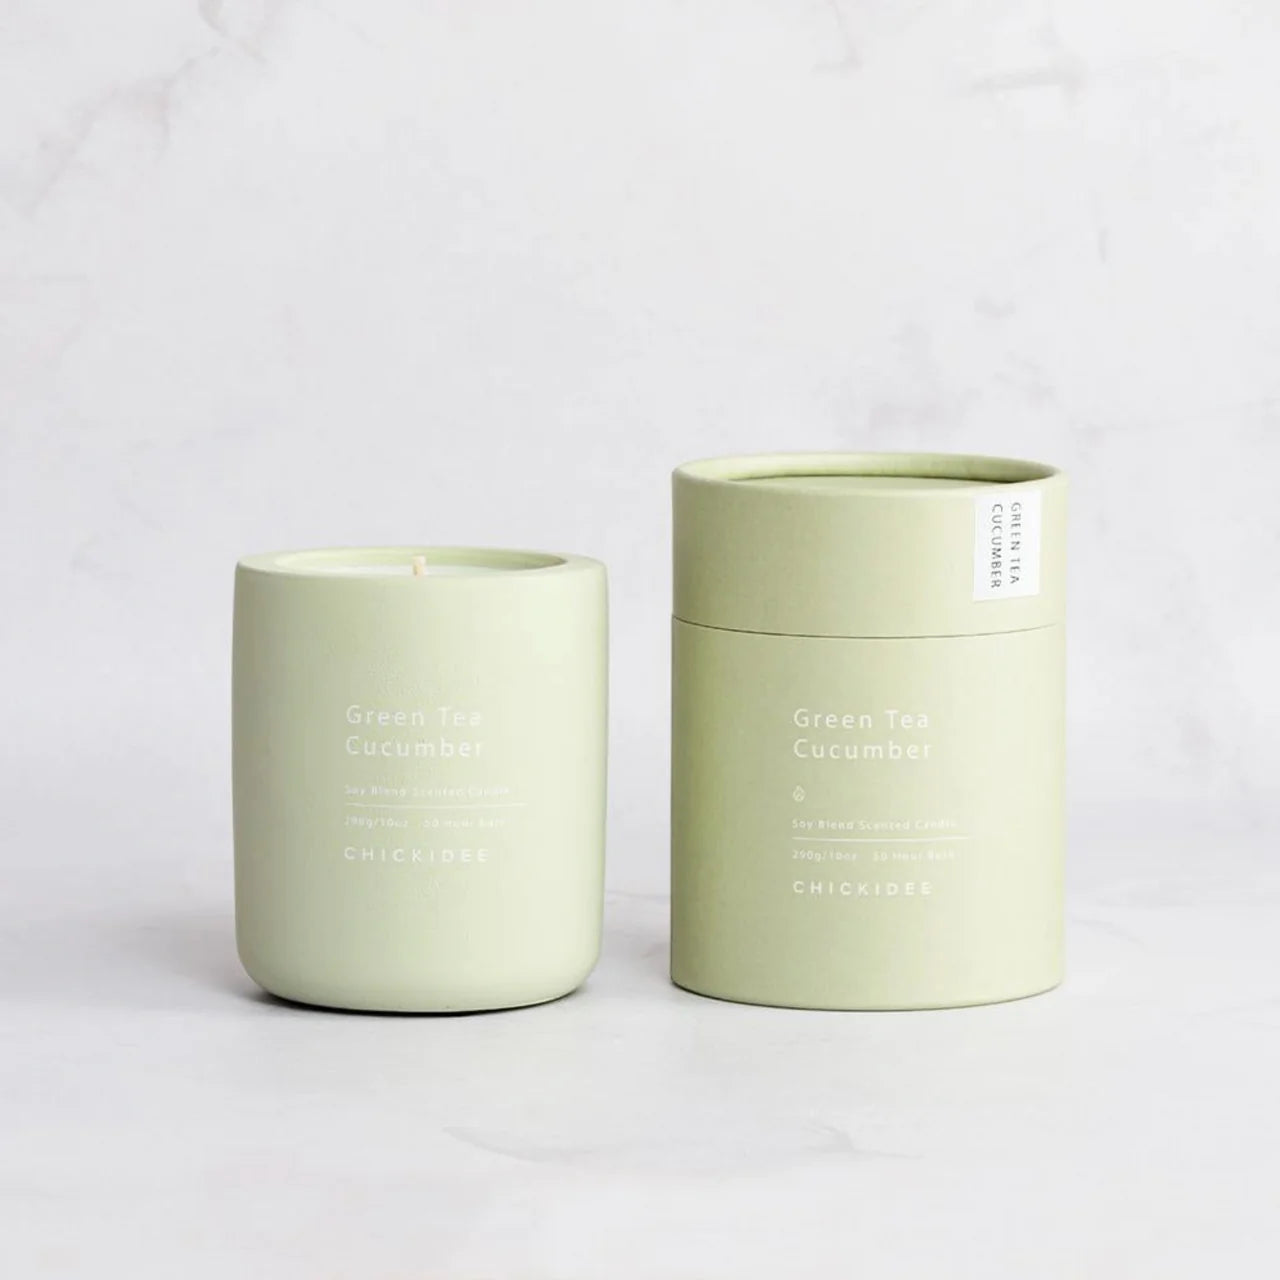 GREEN TEA & CUCUMBER - Concrete candle